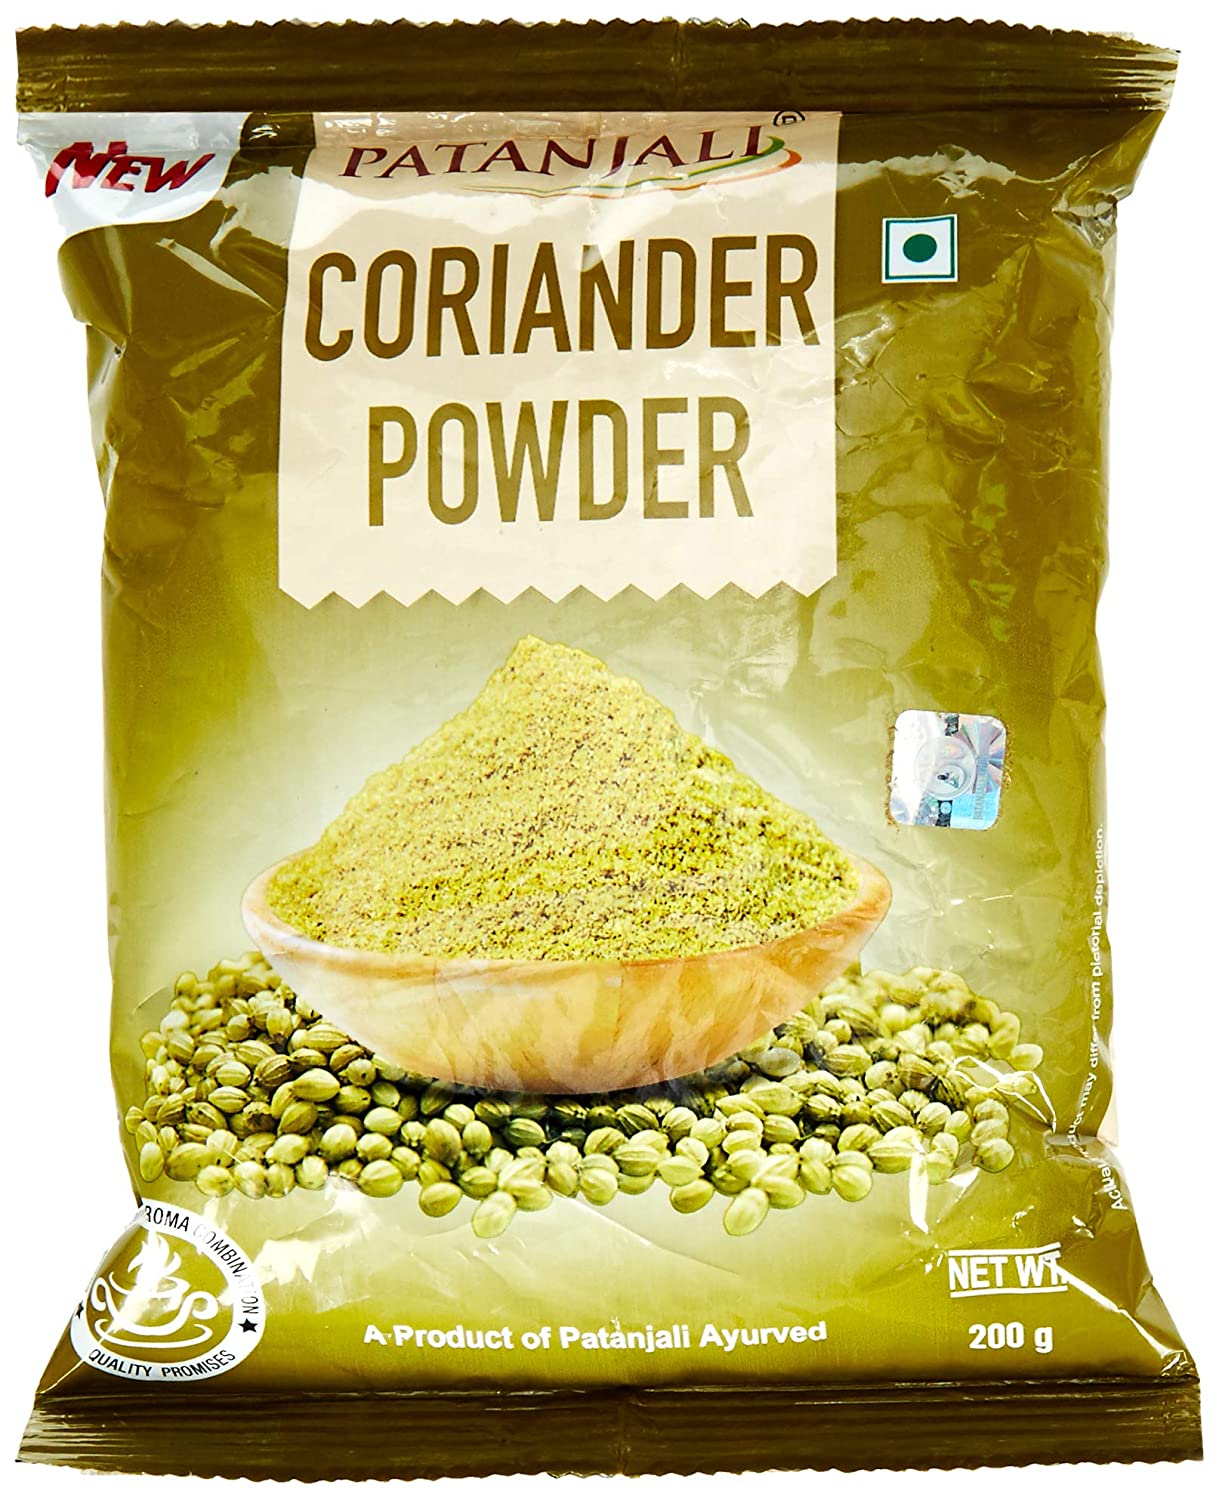 Patanjali Coriander Powder, 200g